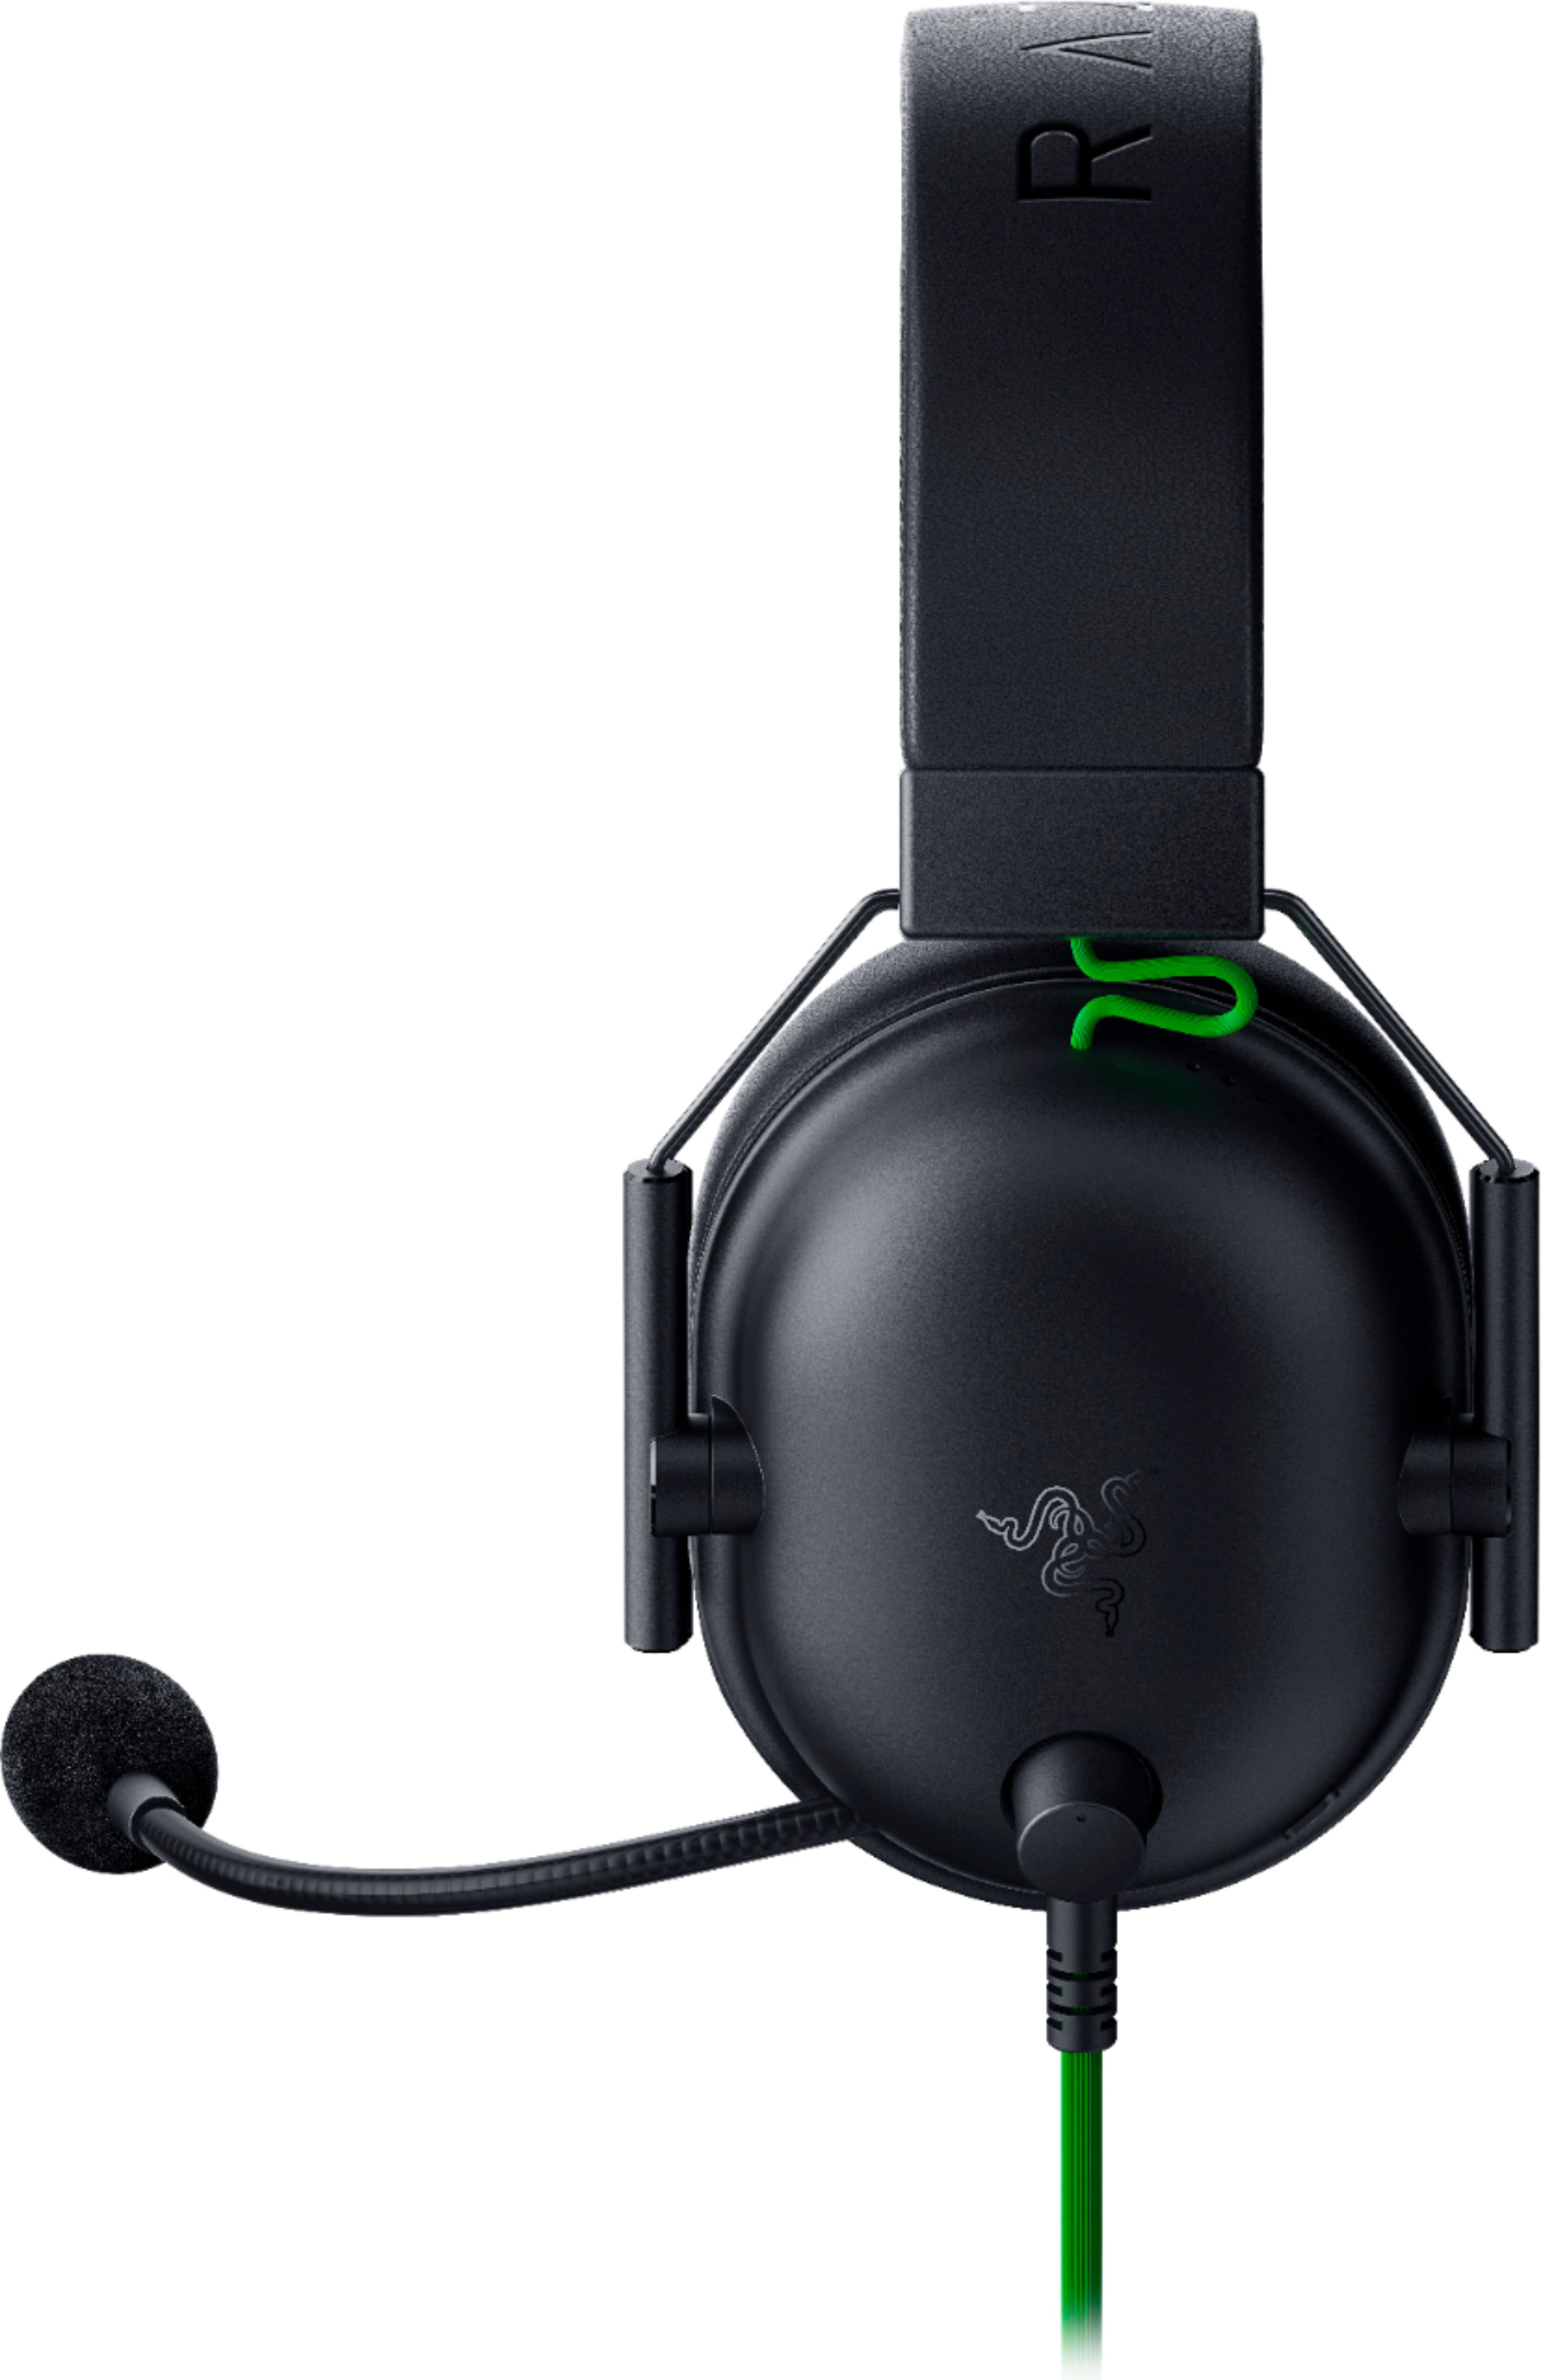 Razer BlackShark V2 X Gaming Headset: 7.1 Surround Sound - 50mm Drivers -  Memory Foam Cushion - For PC, PS4, PS5, Switch - 3.5mm Audio Jack - Black